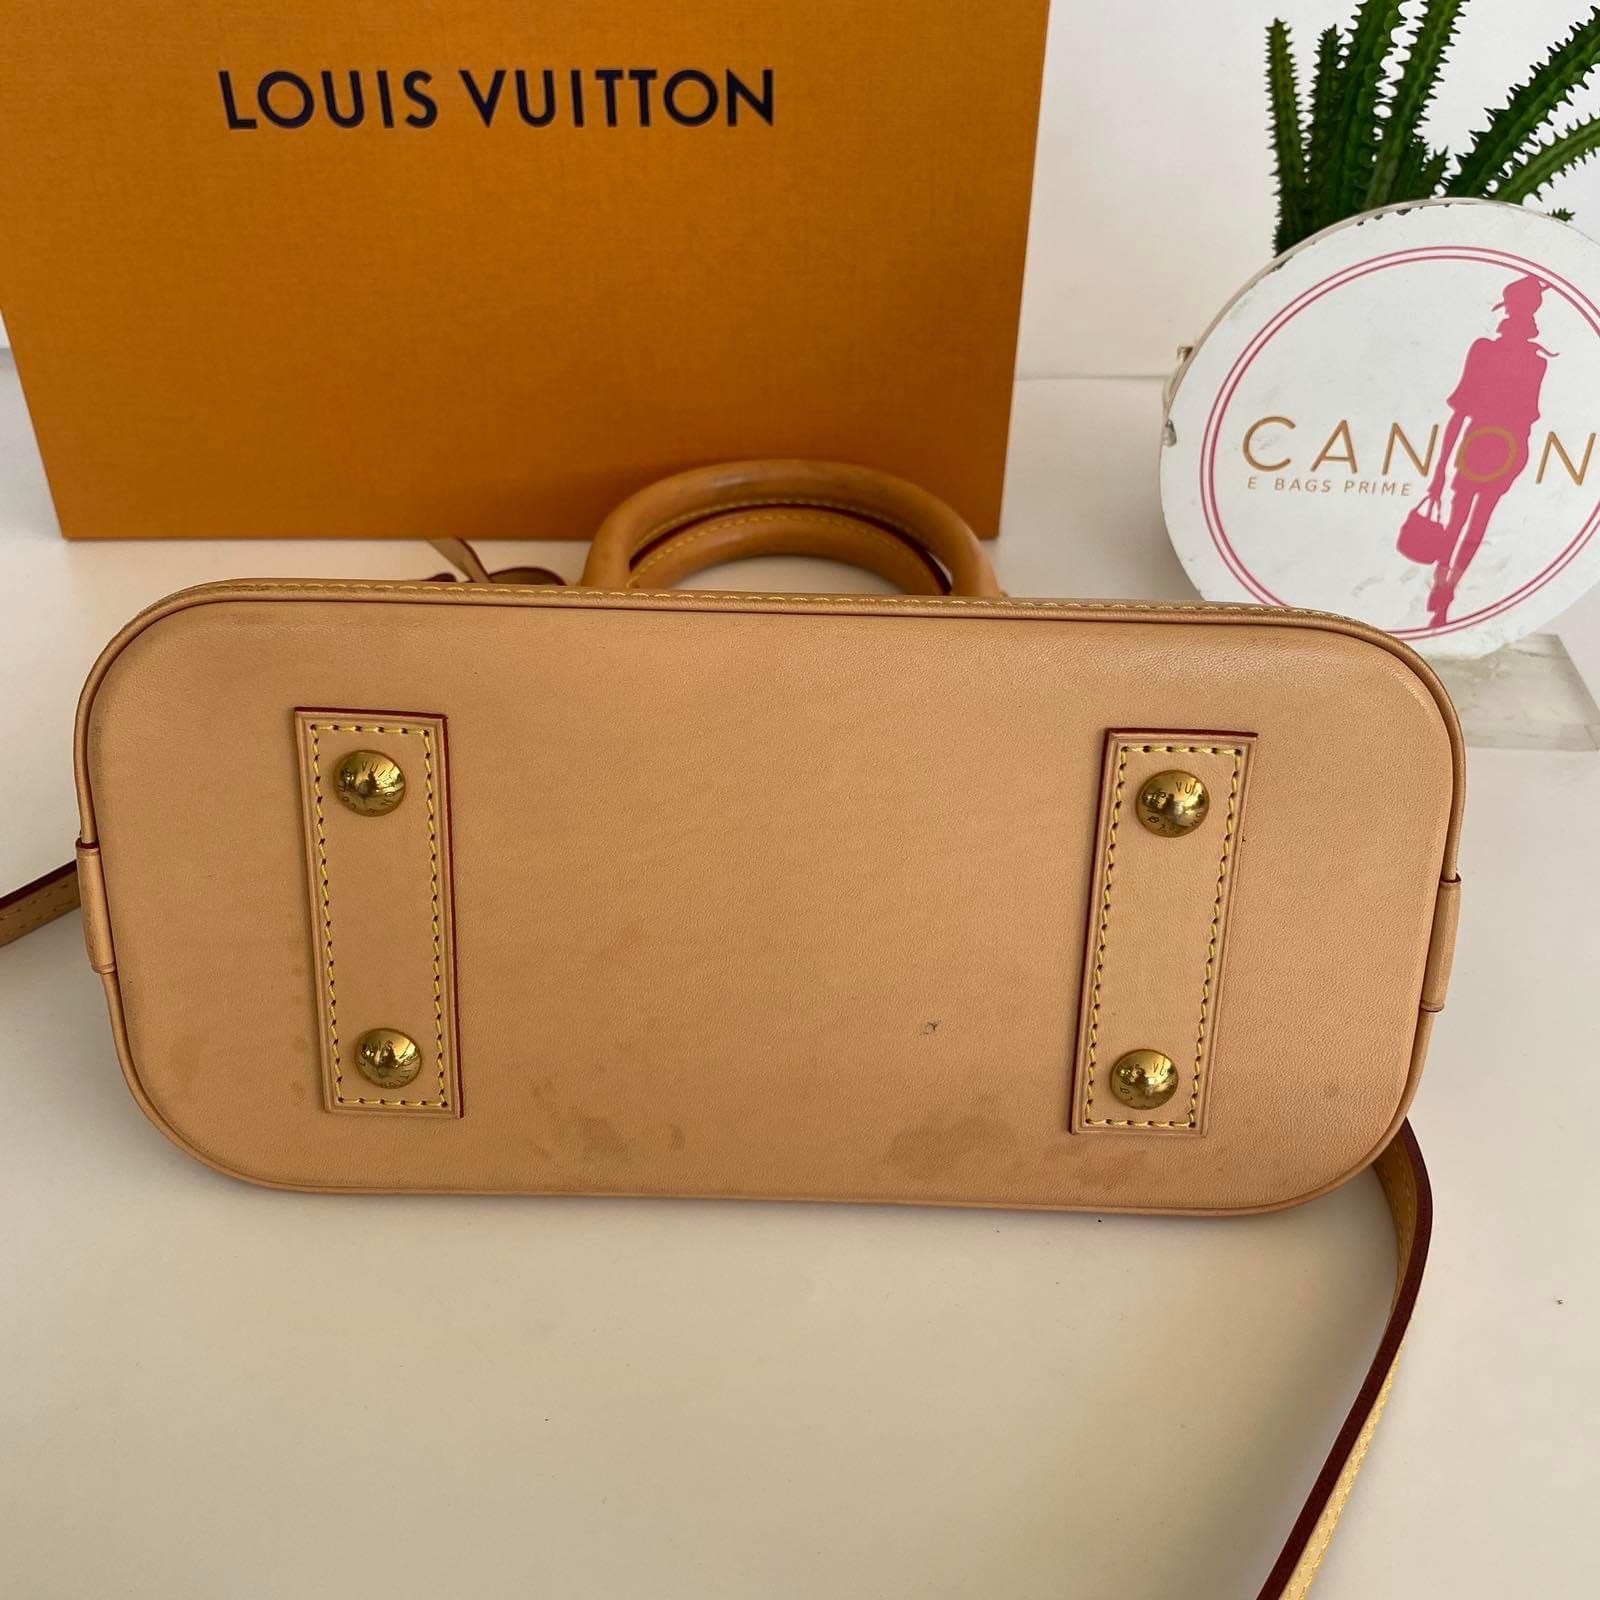 Nước Hoa Nam Louis Vuitton - First Impressions 